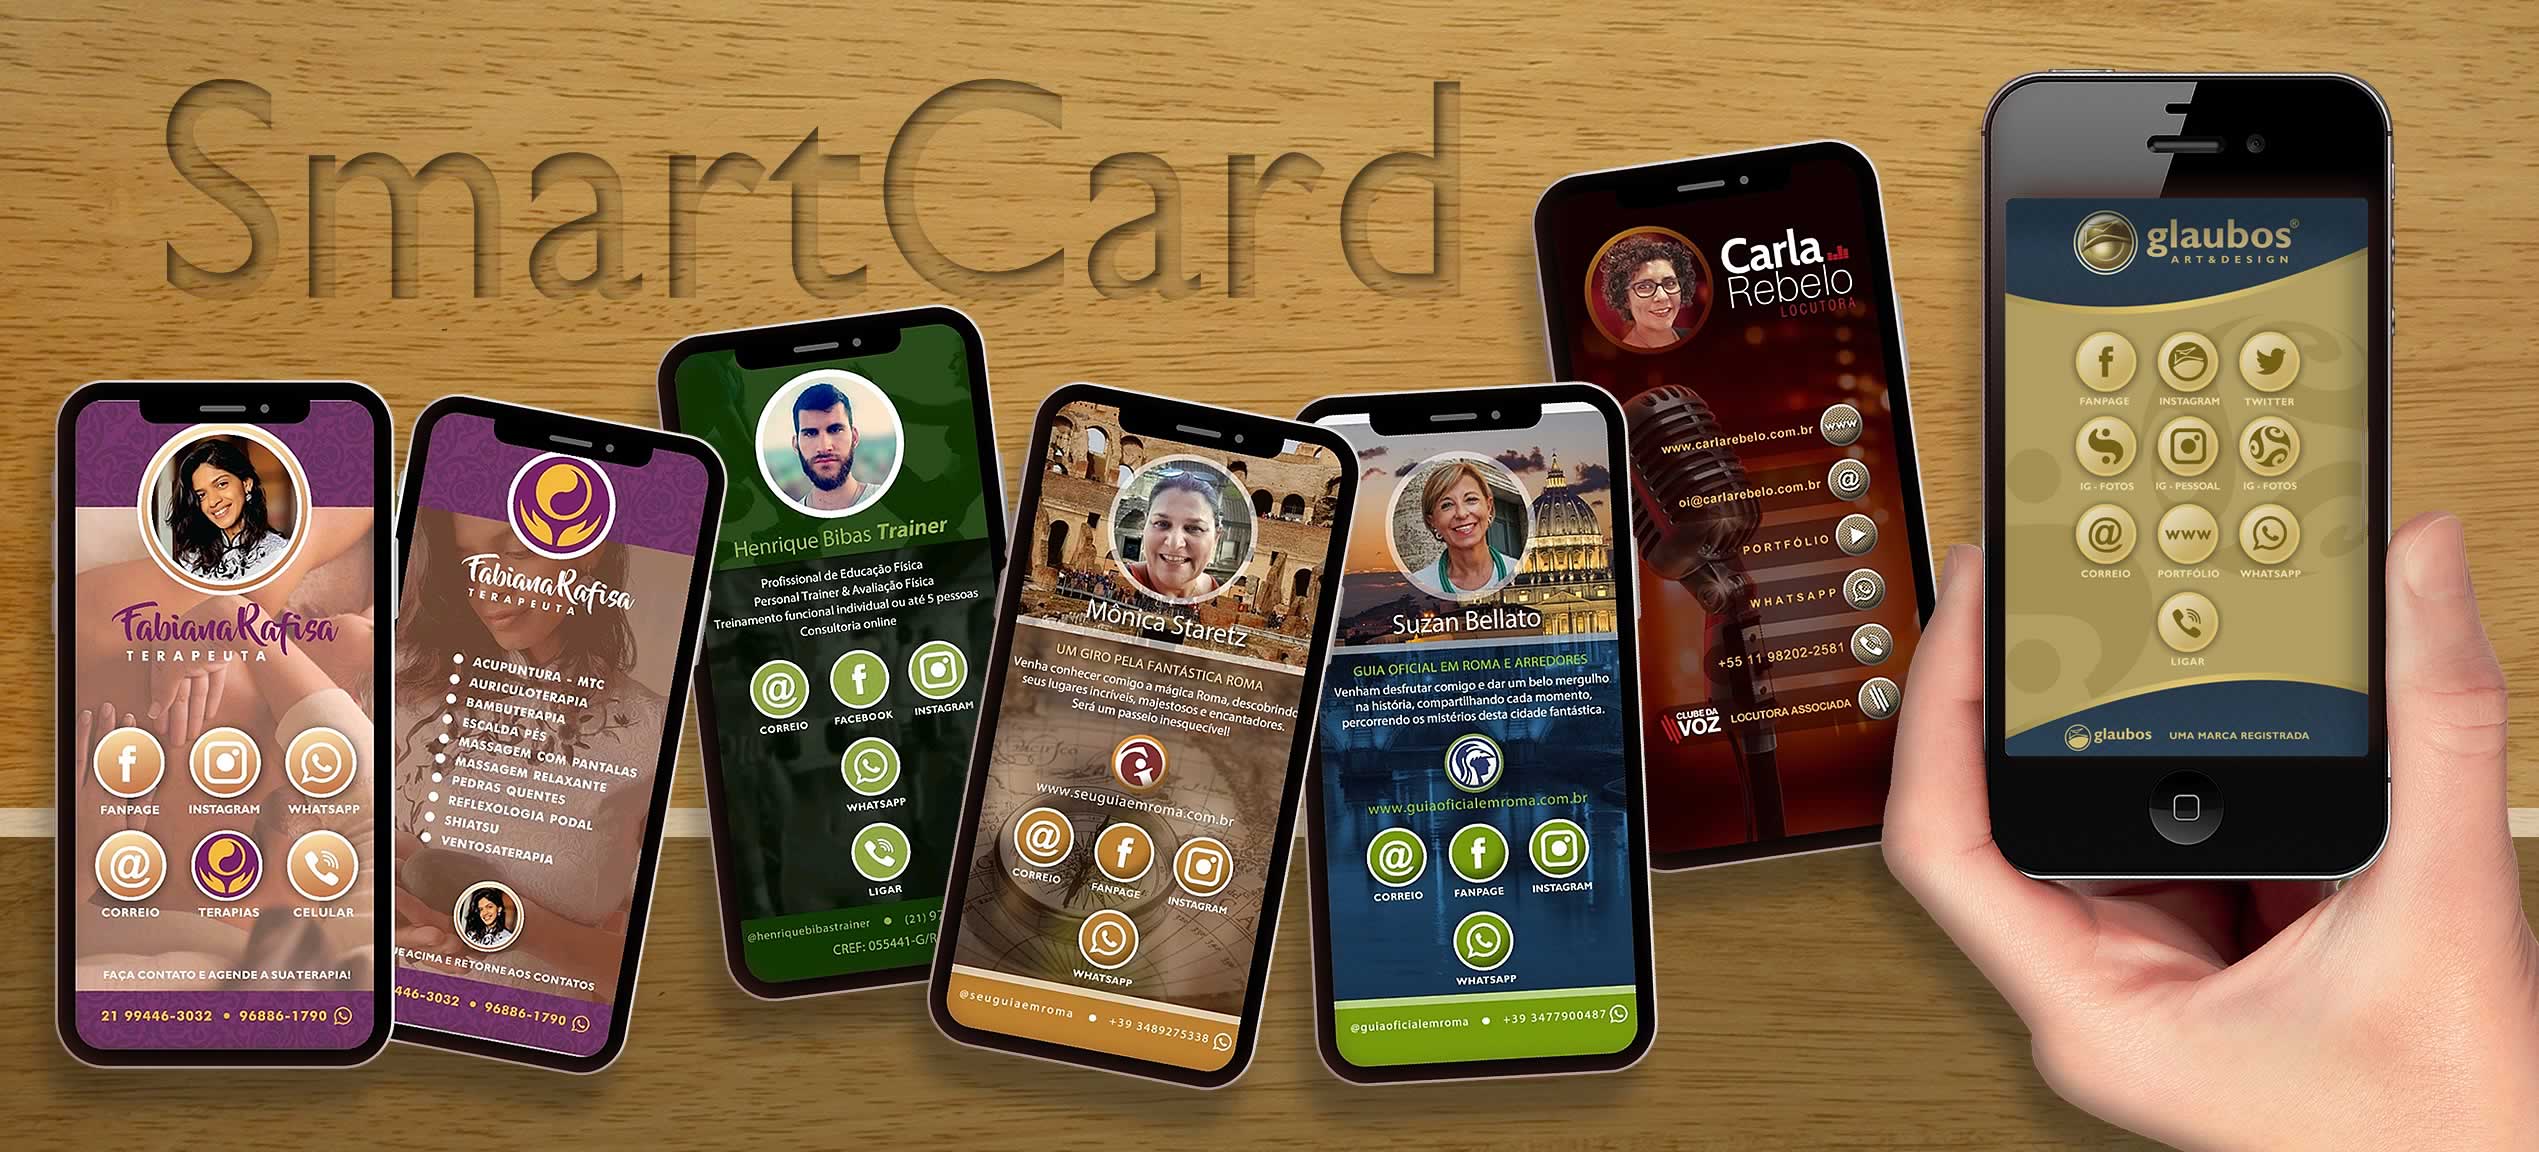 SmartCard